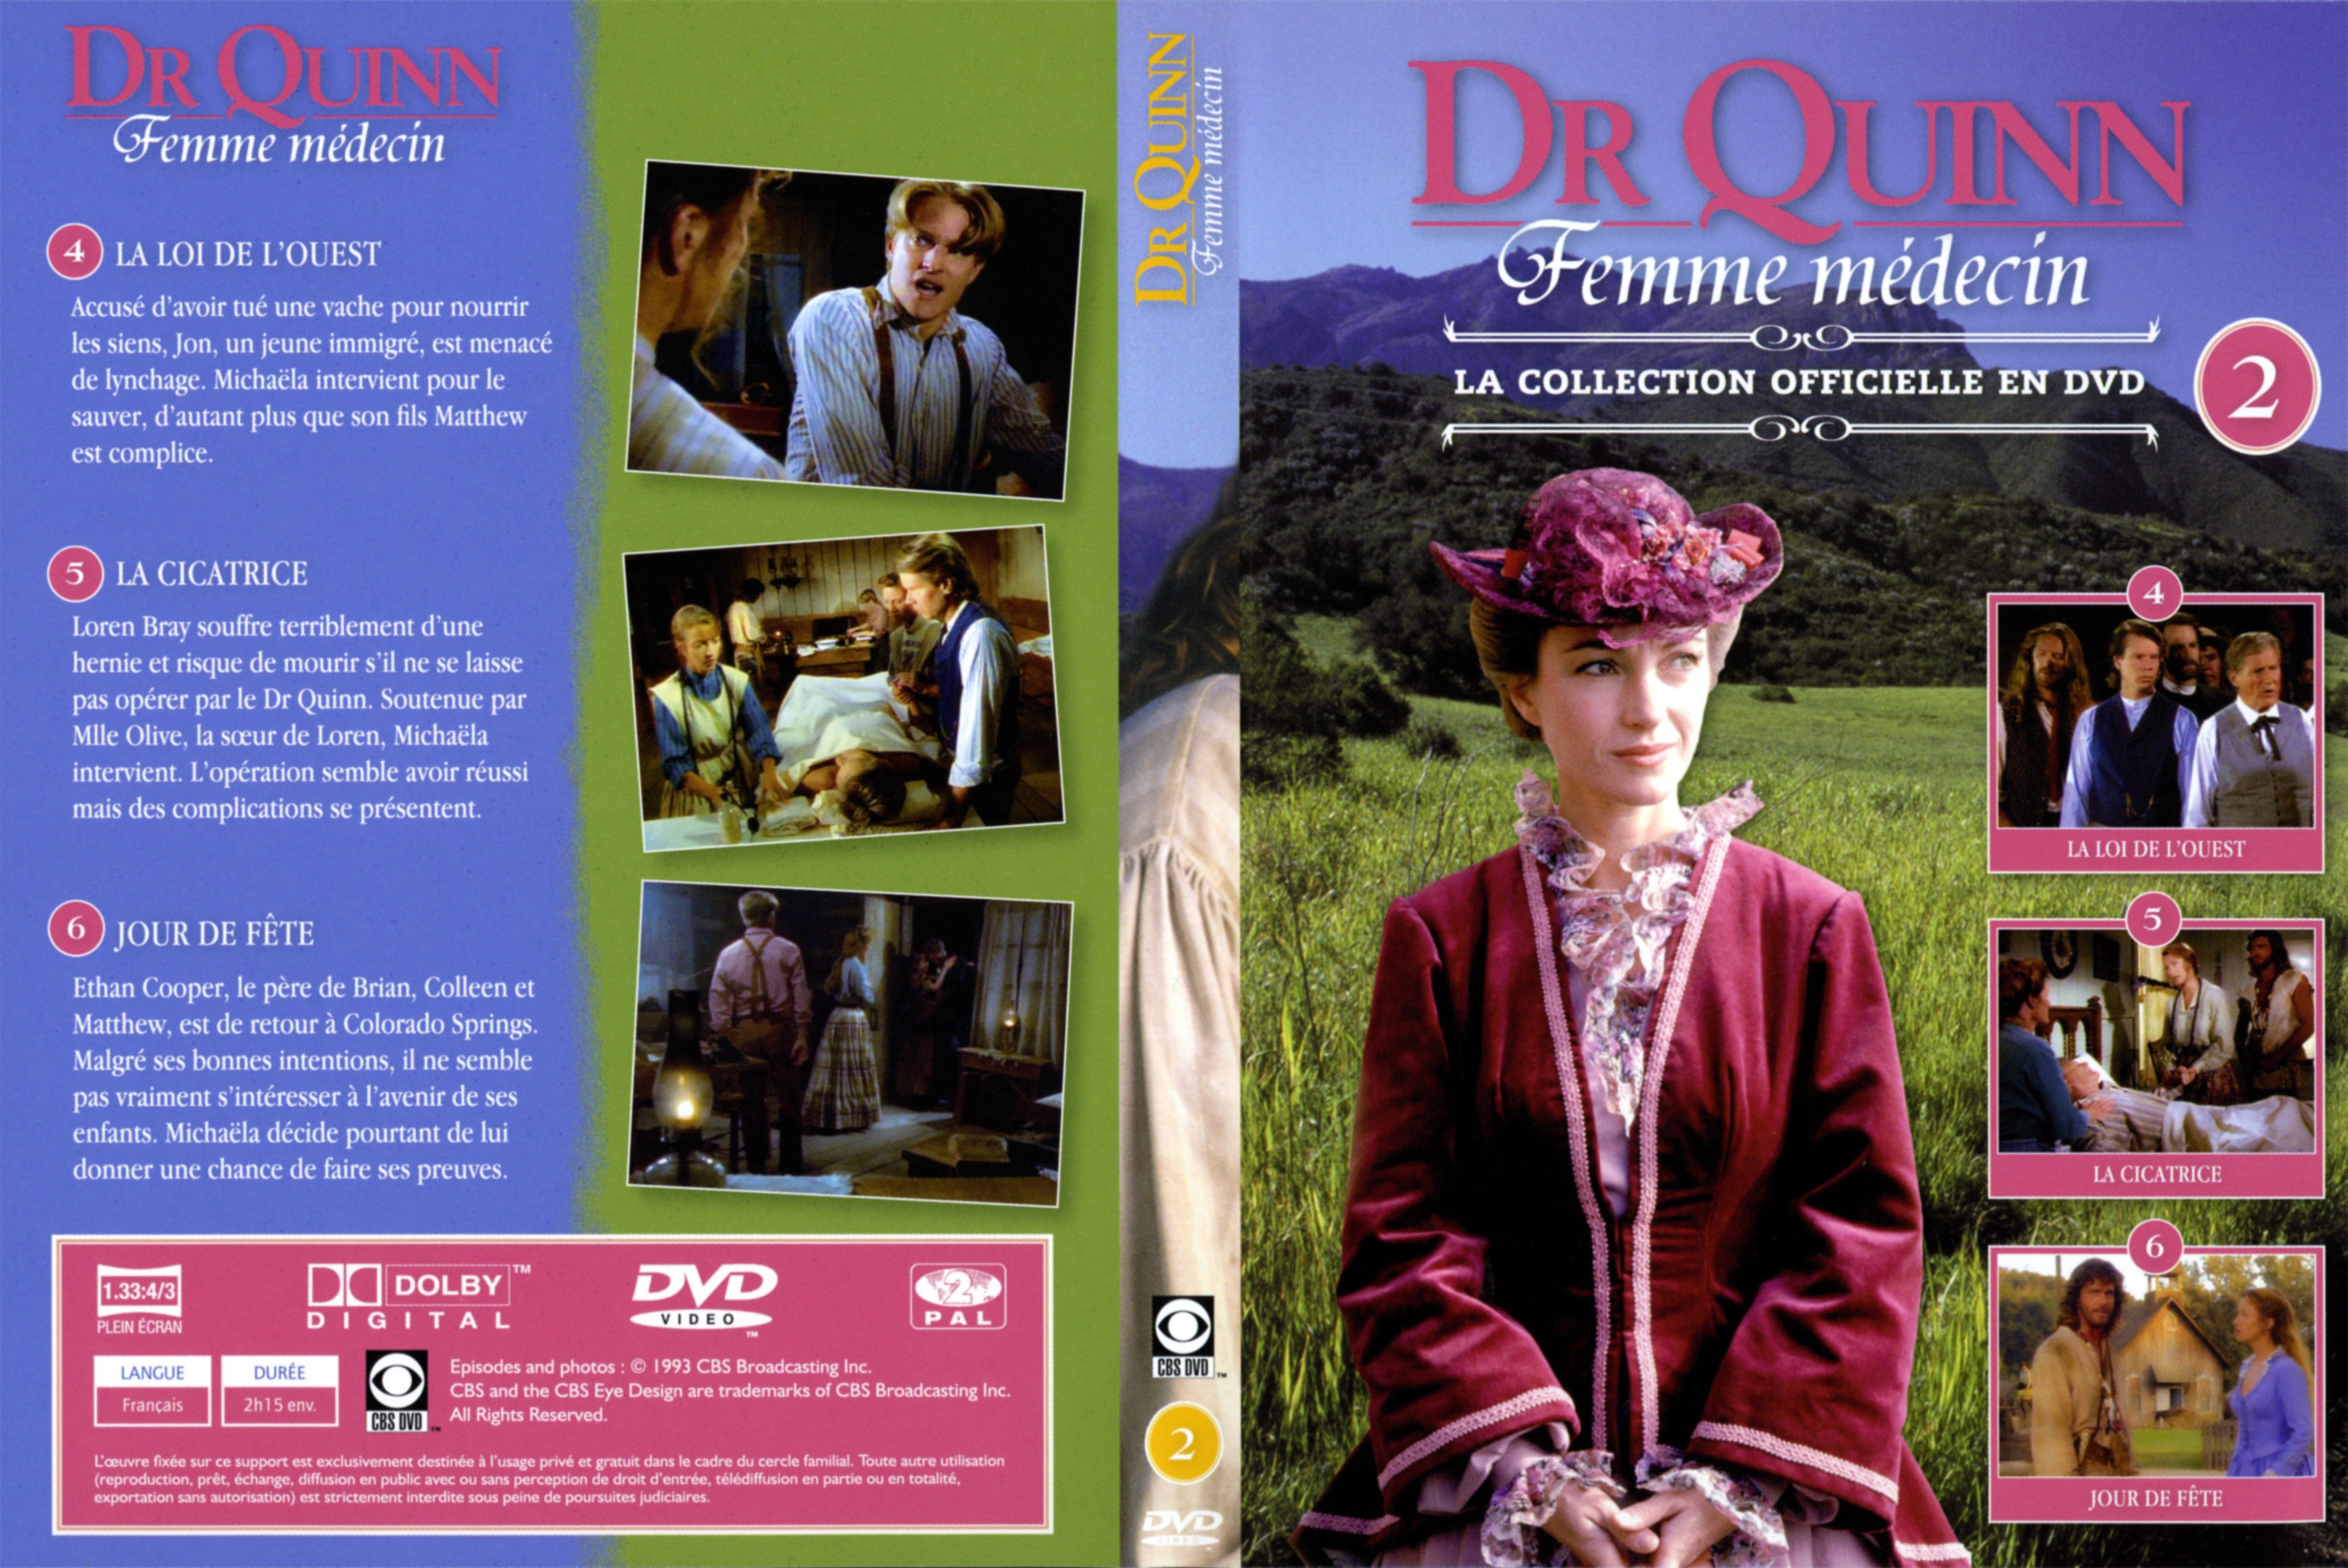 Jaquette DVD Dr Quinn femme medecin vol 2